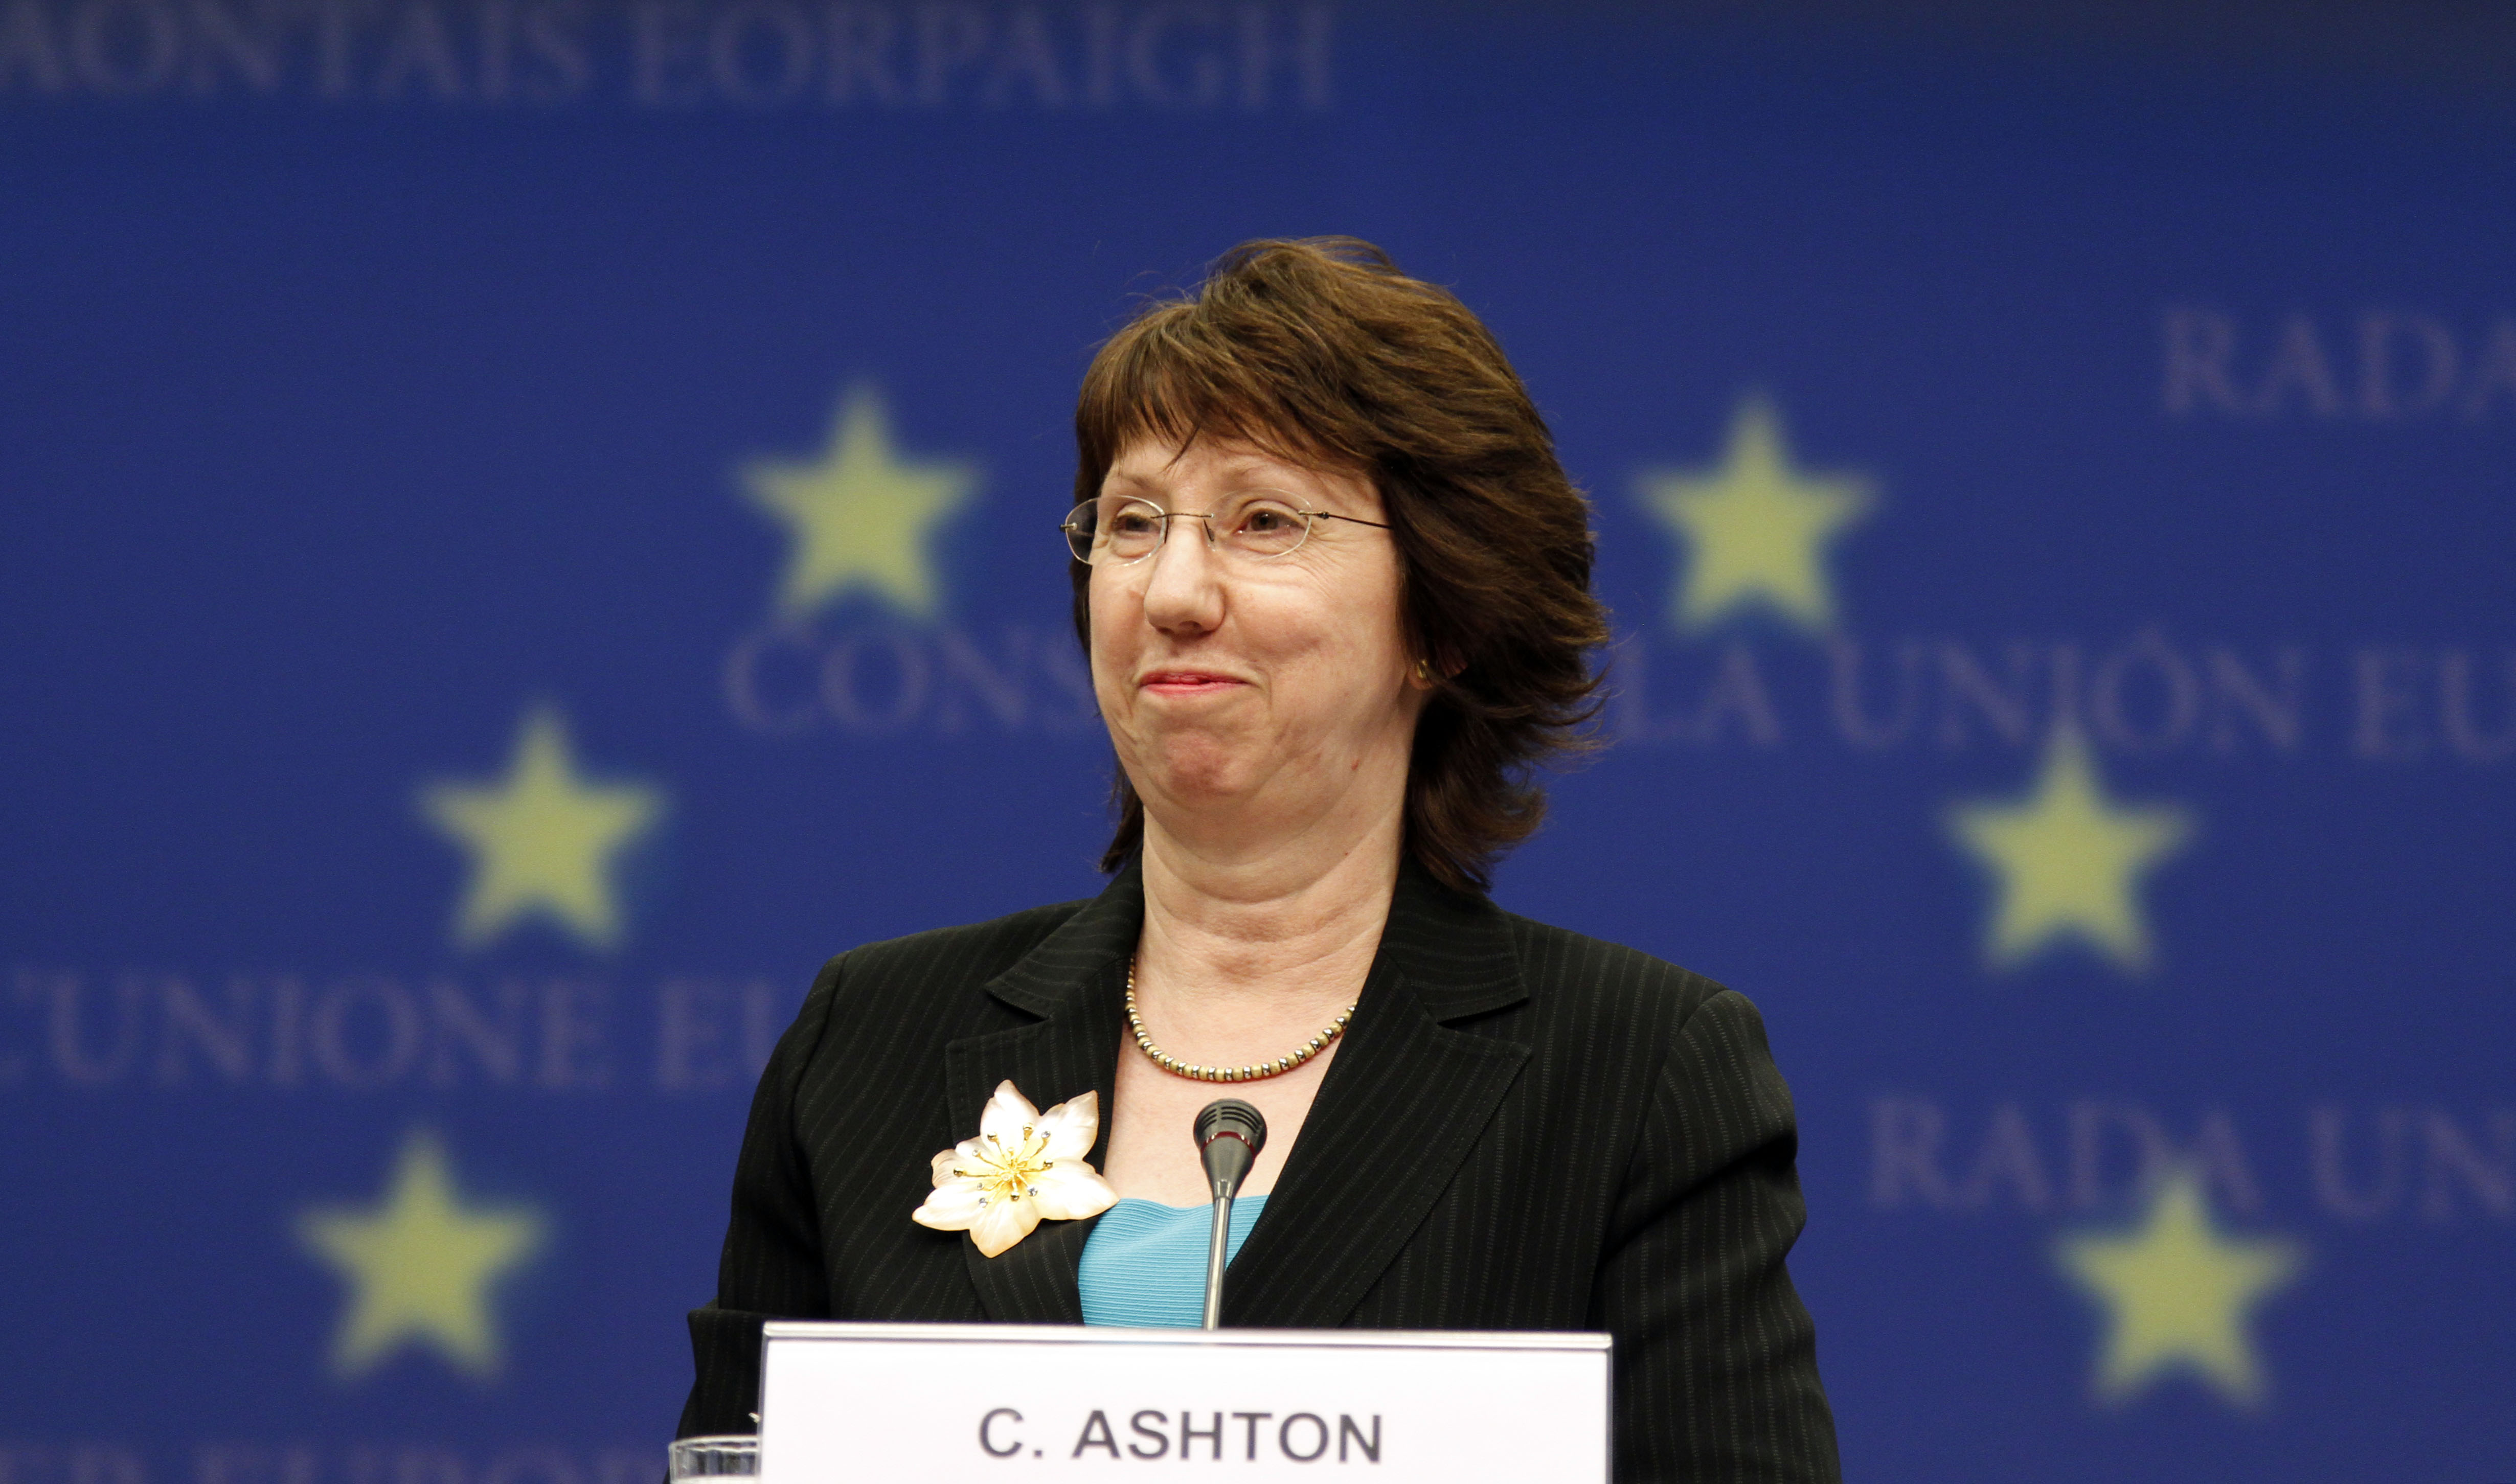 ... precis som Lady Ashton, EU:s höga representant i utrikesfrågor.